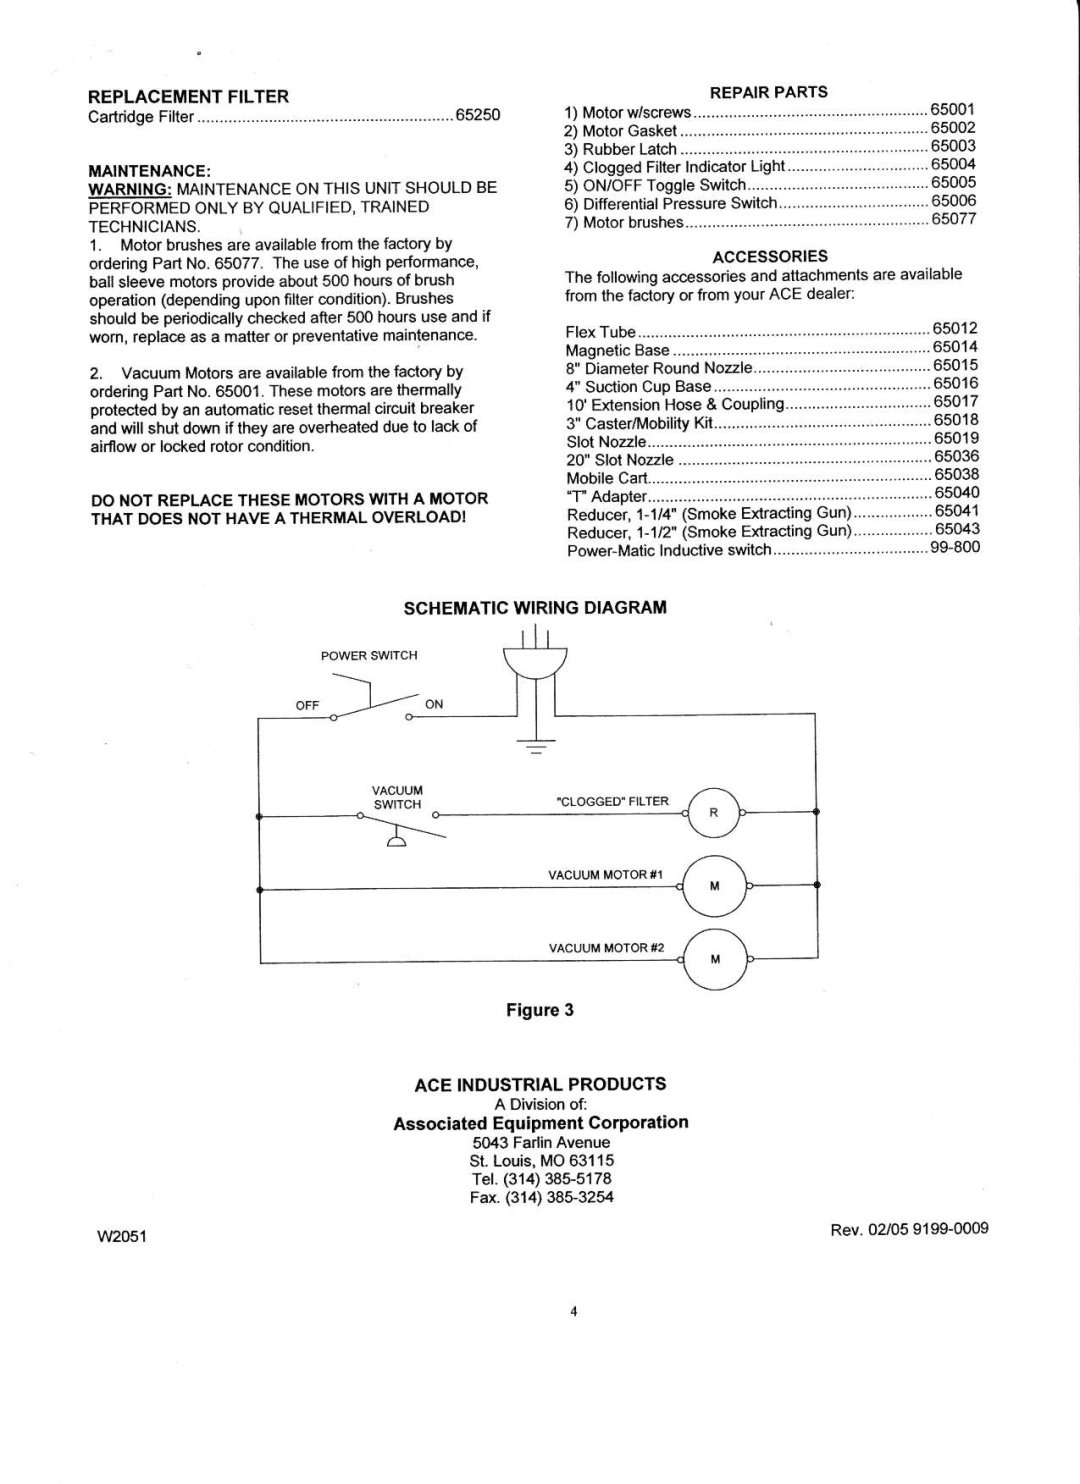 Associated Equipment 73-250 manual AssociatedEqulpmentCorporation, SCHEiATIGWIRINGDIAGRAM, Aceindustrialproducts, w2051 